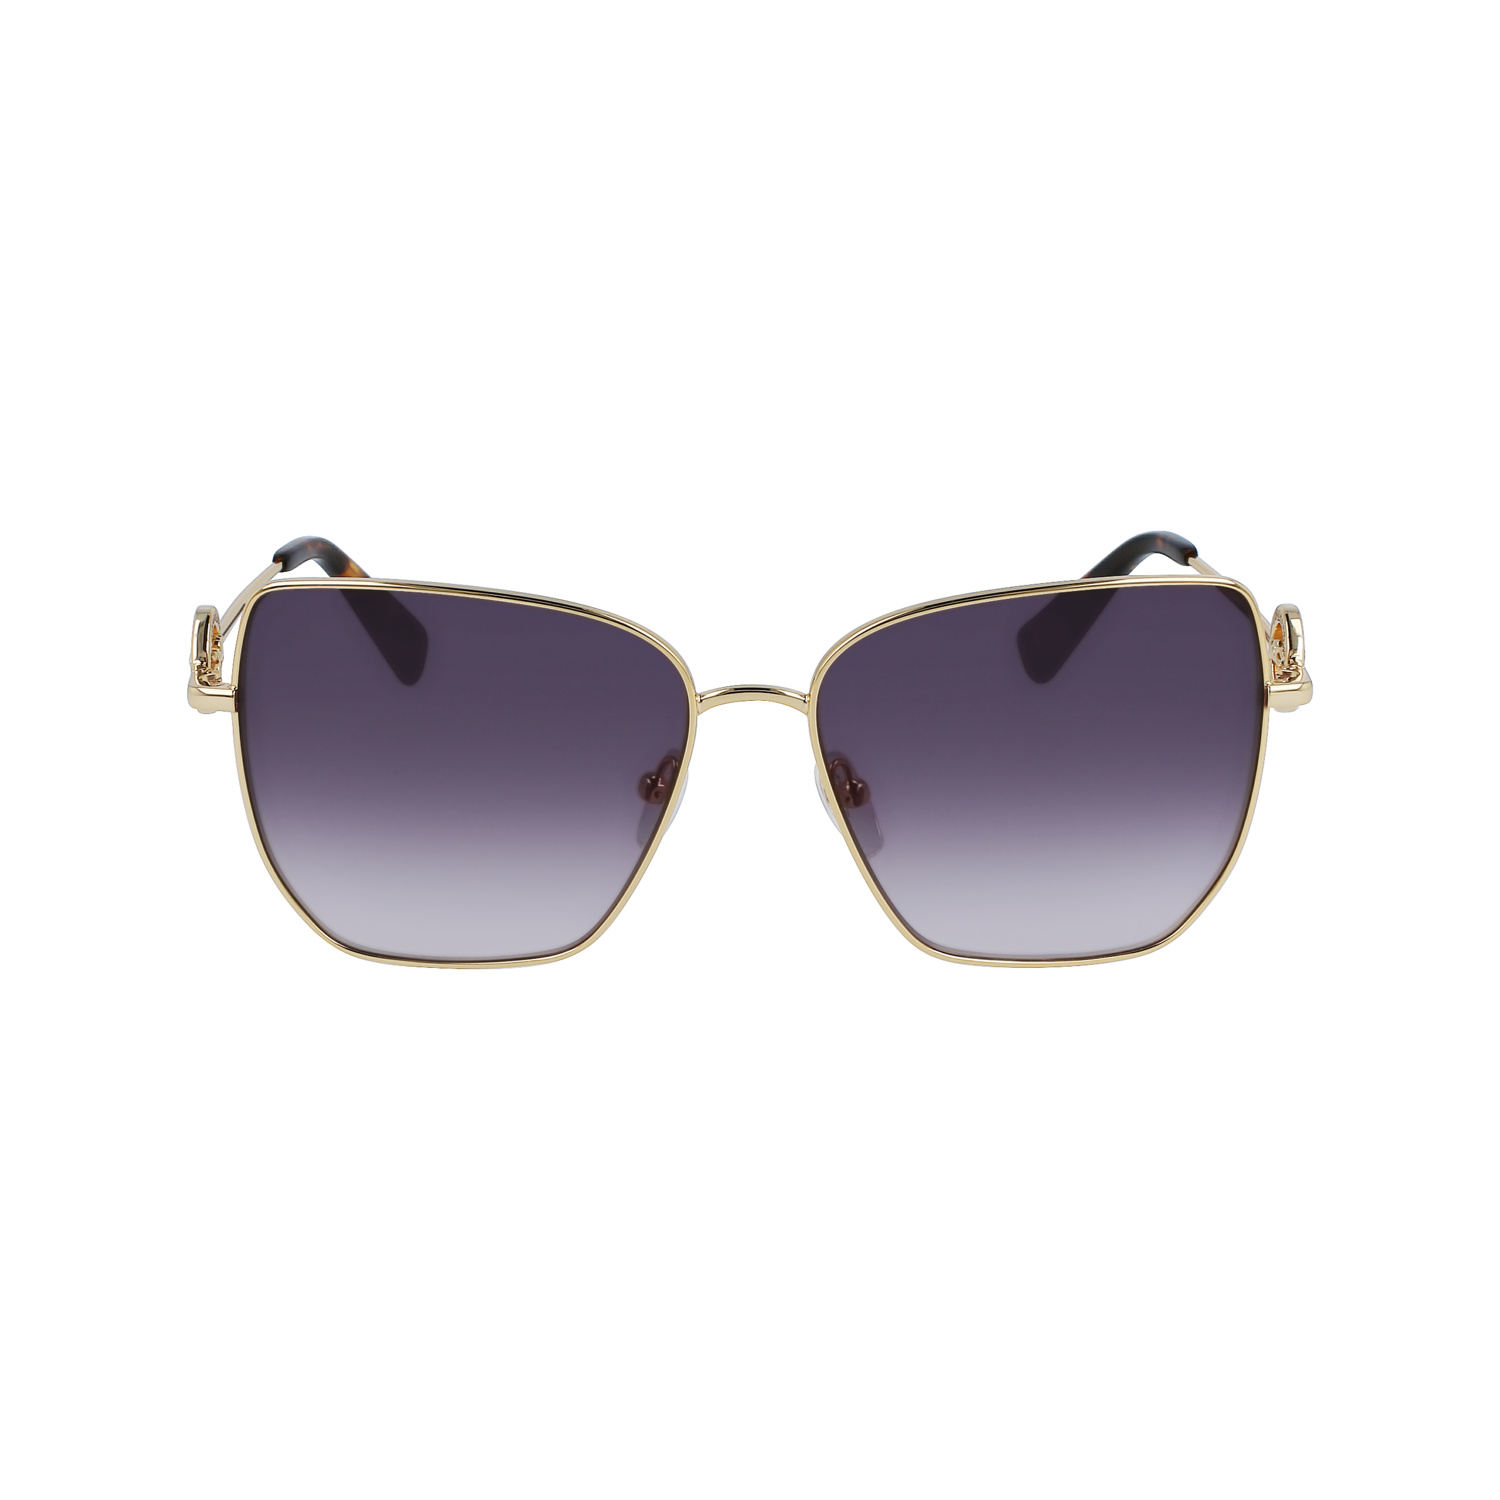 Longchamp Sunglasses In Gold